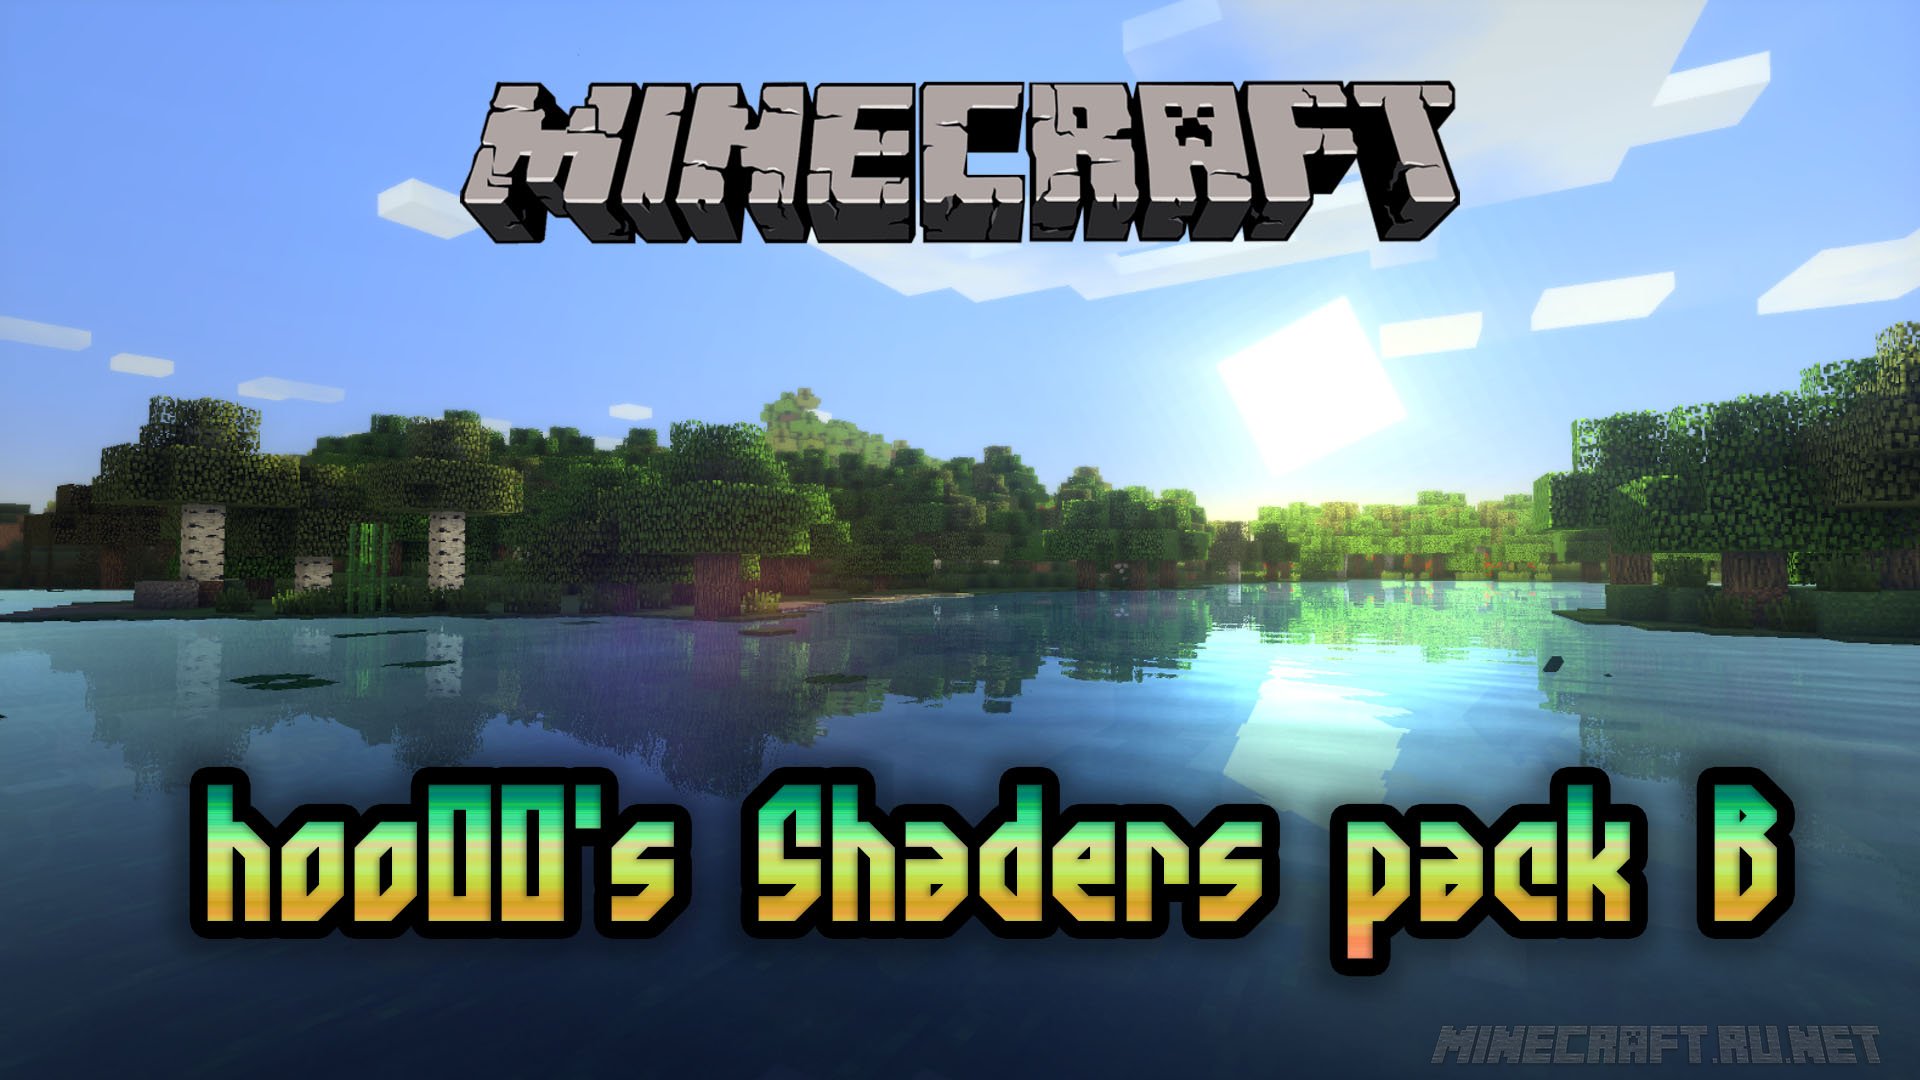 minecraft hd shaders 1.12.2